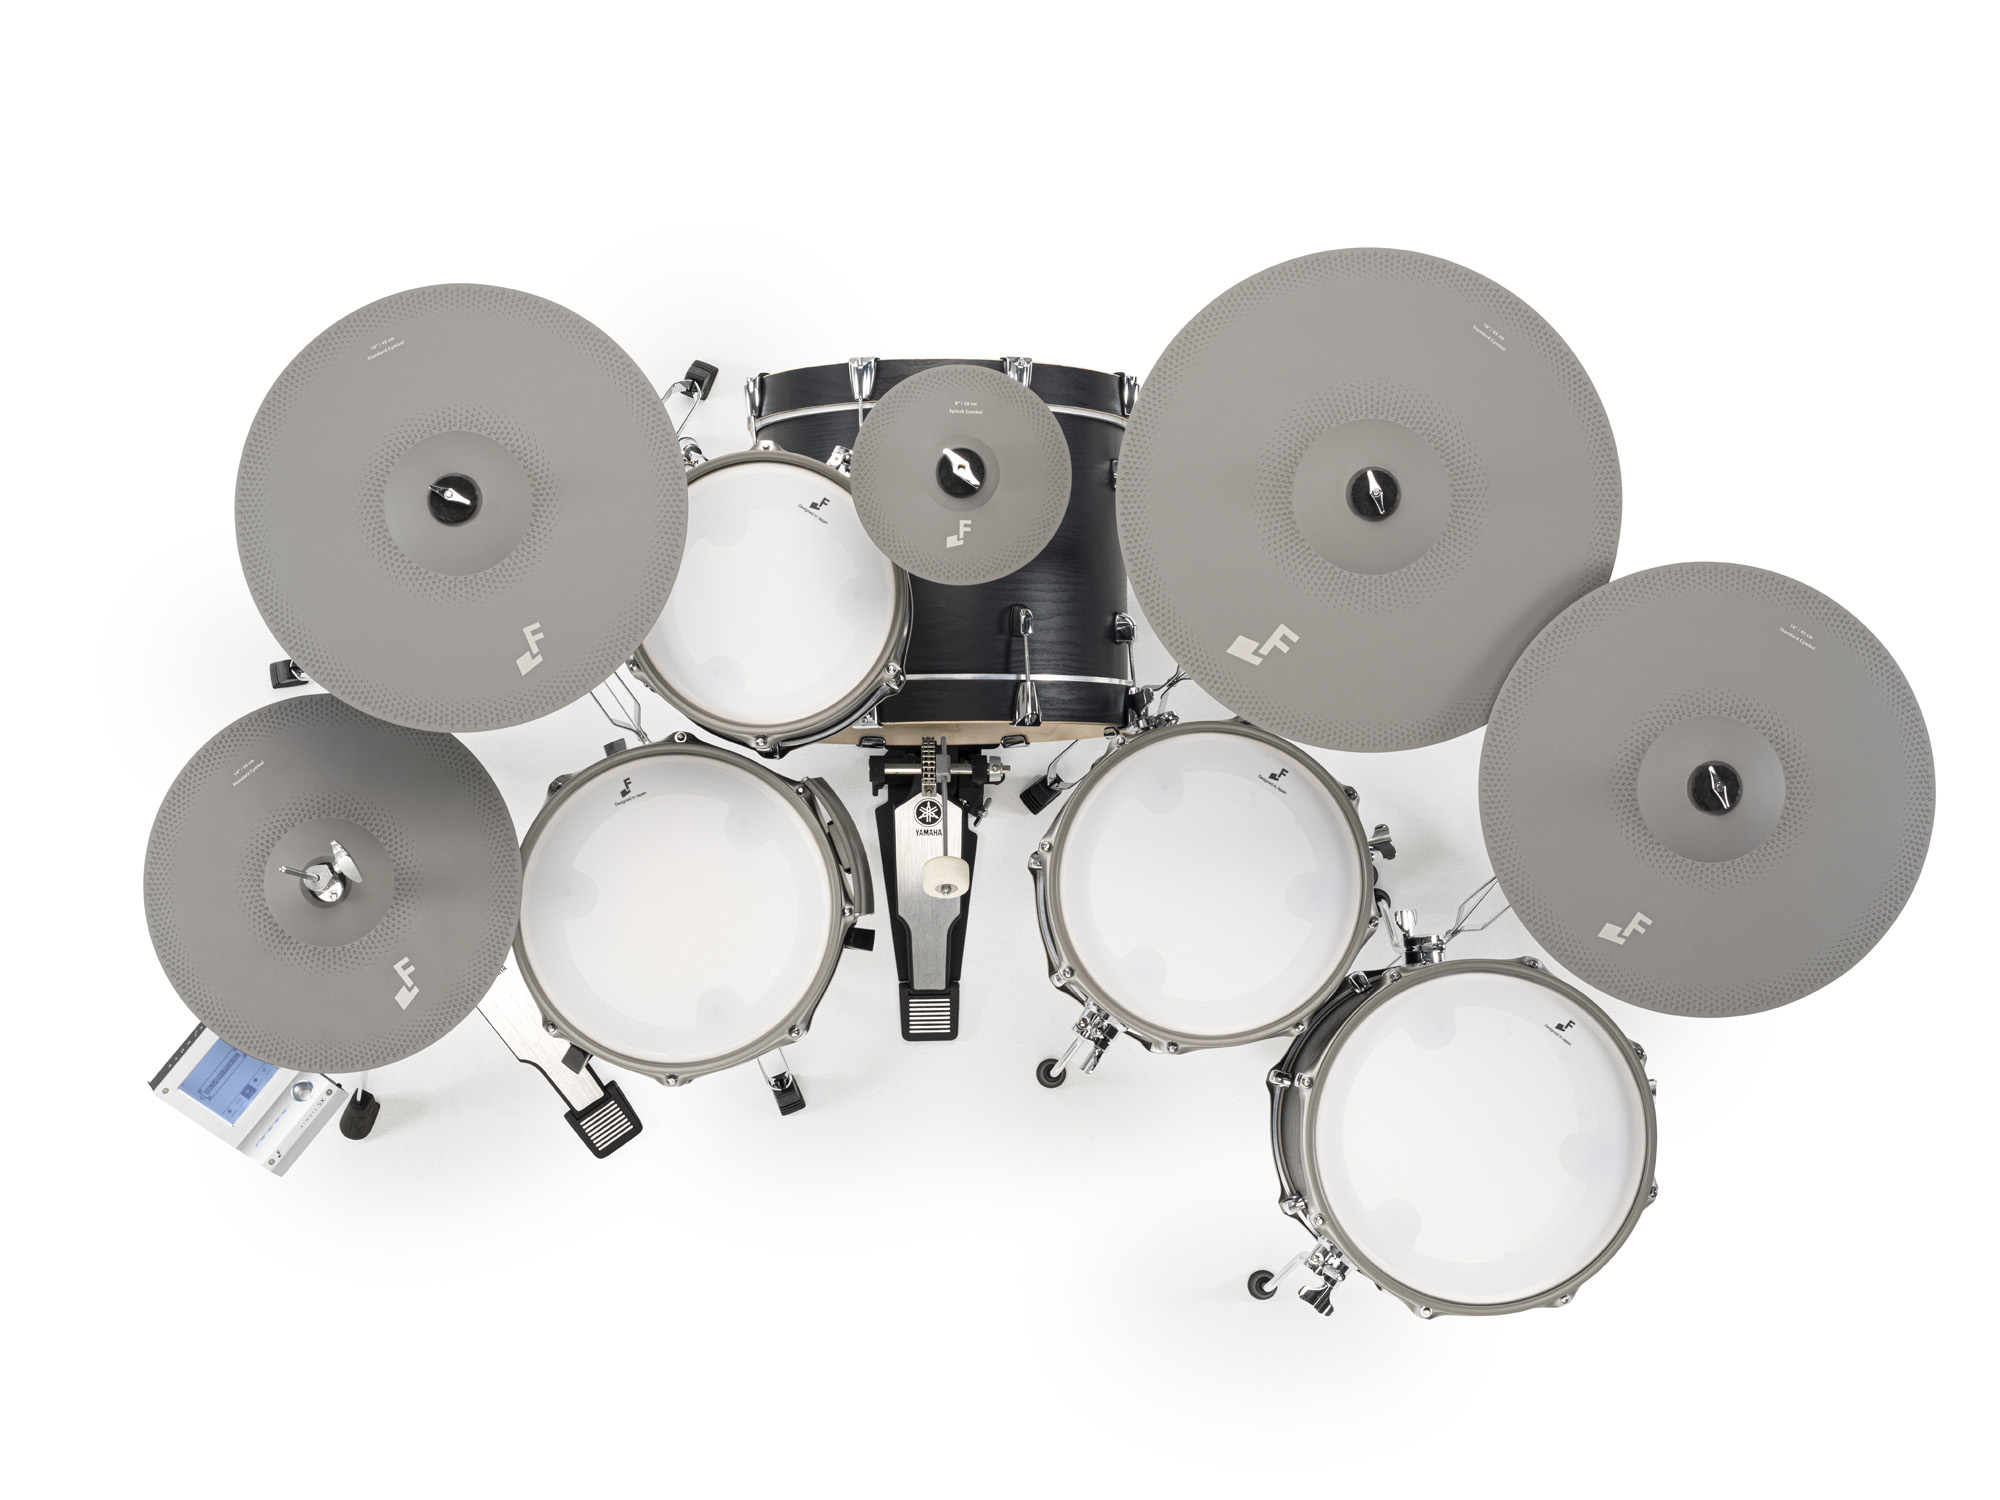 Efnote Efd5x Drum Kit - Komplett E-Drum Set - Variation 2